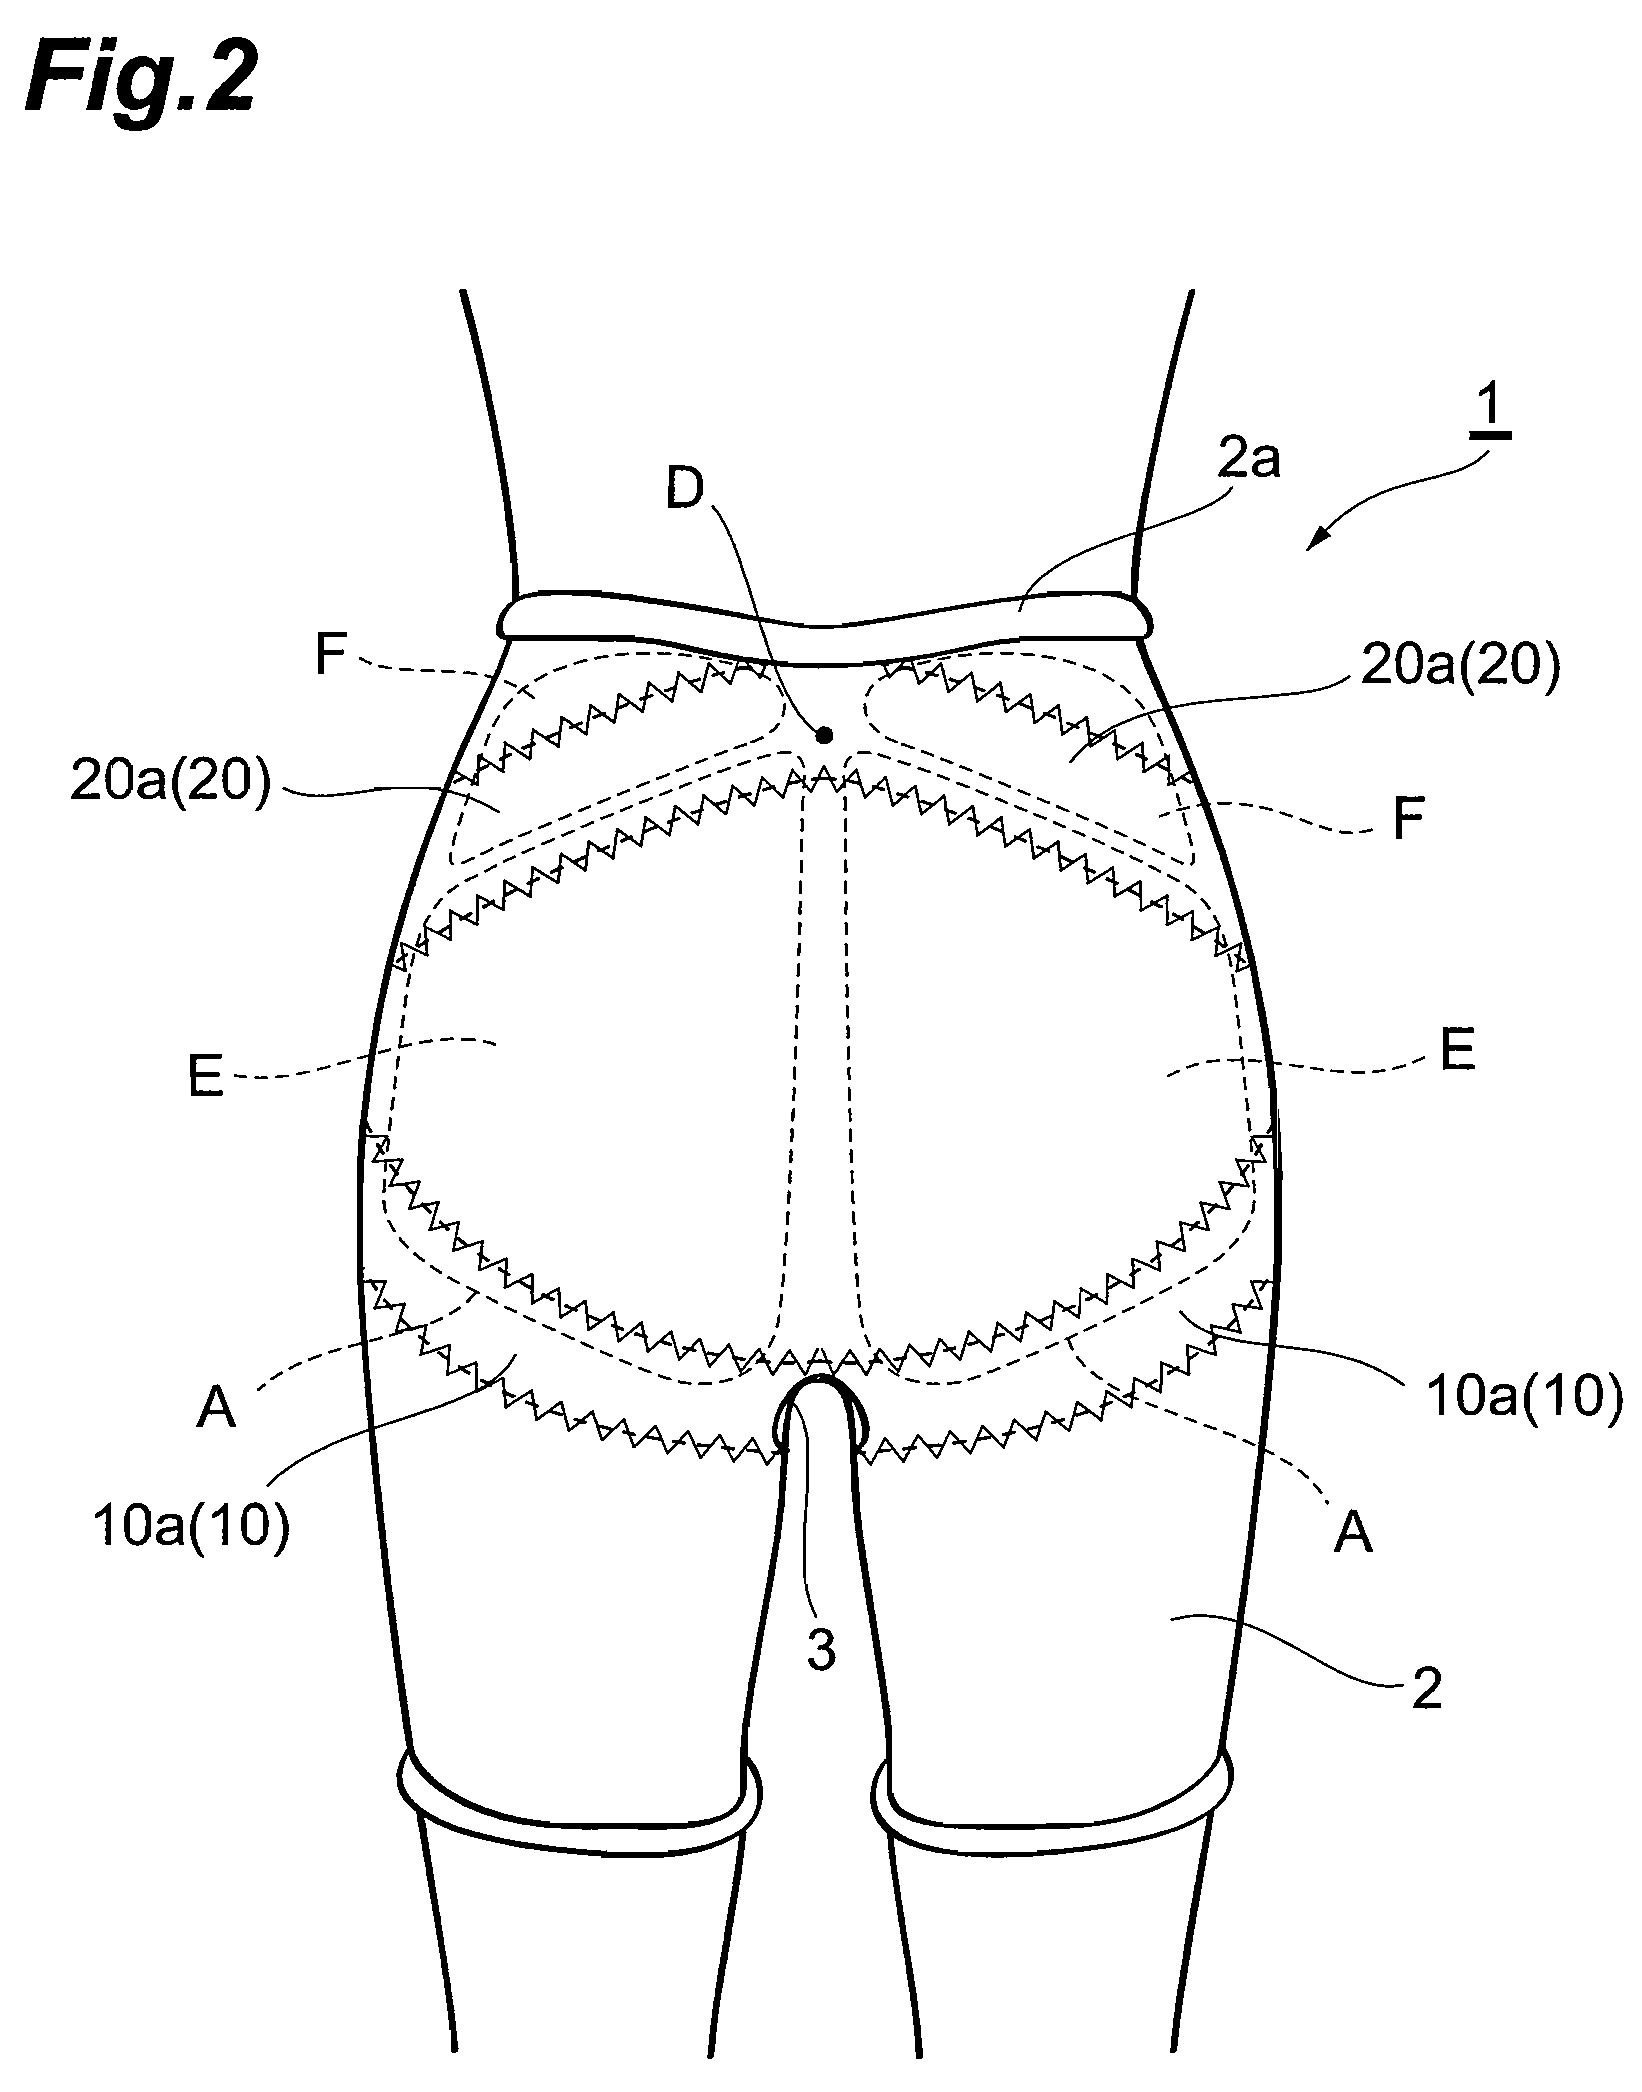 Bottom clothes